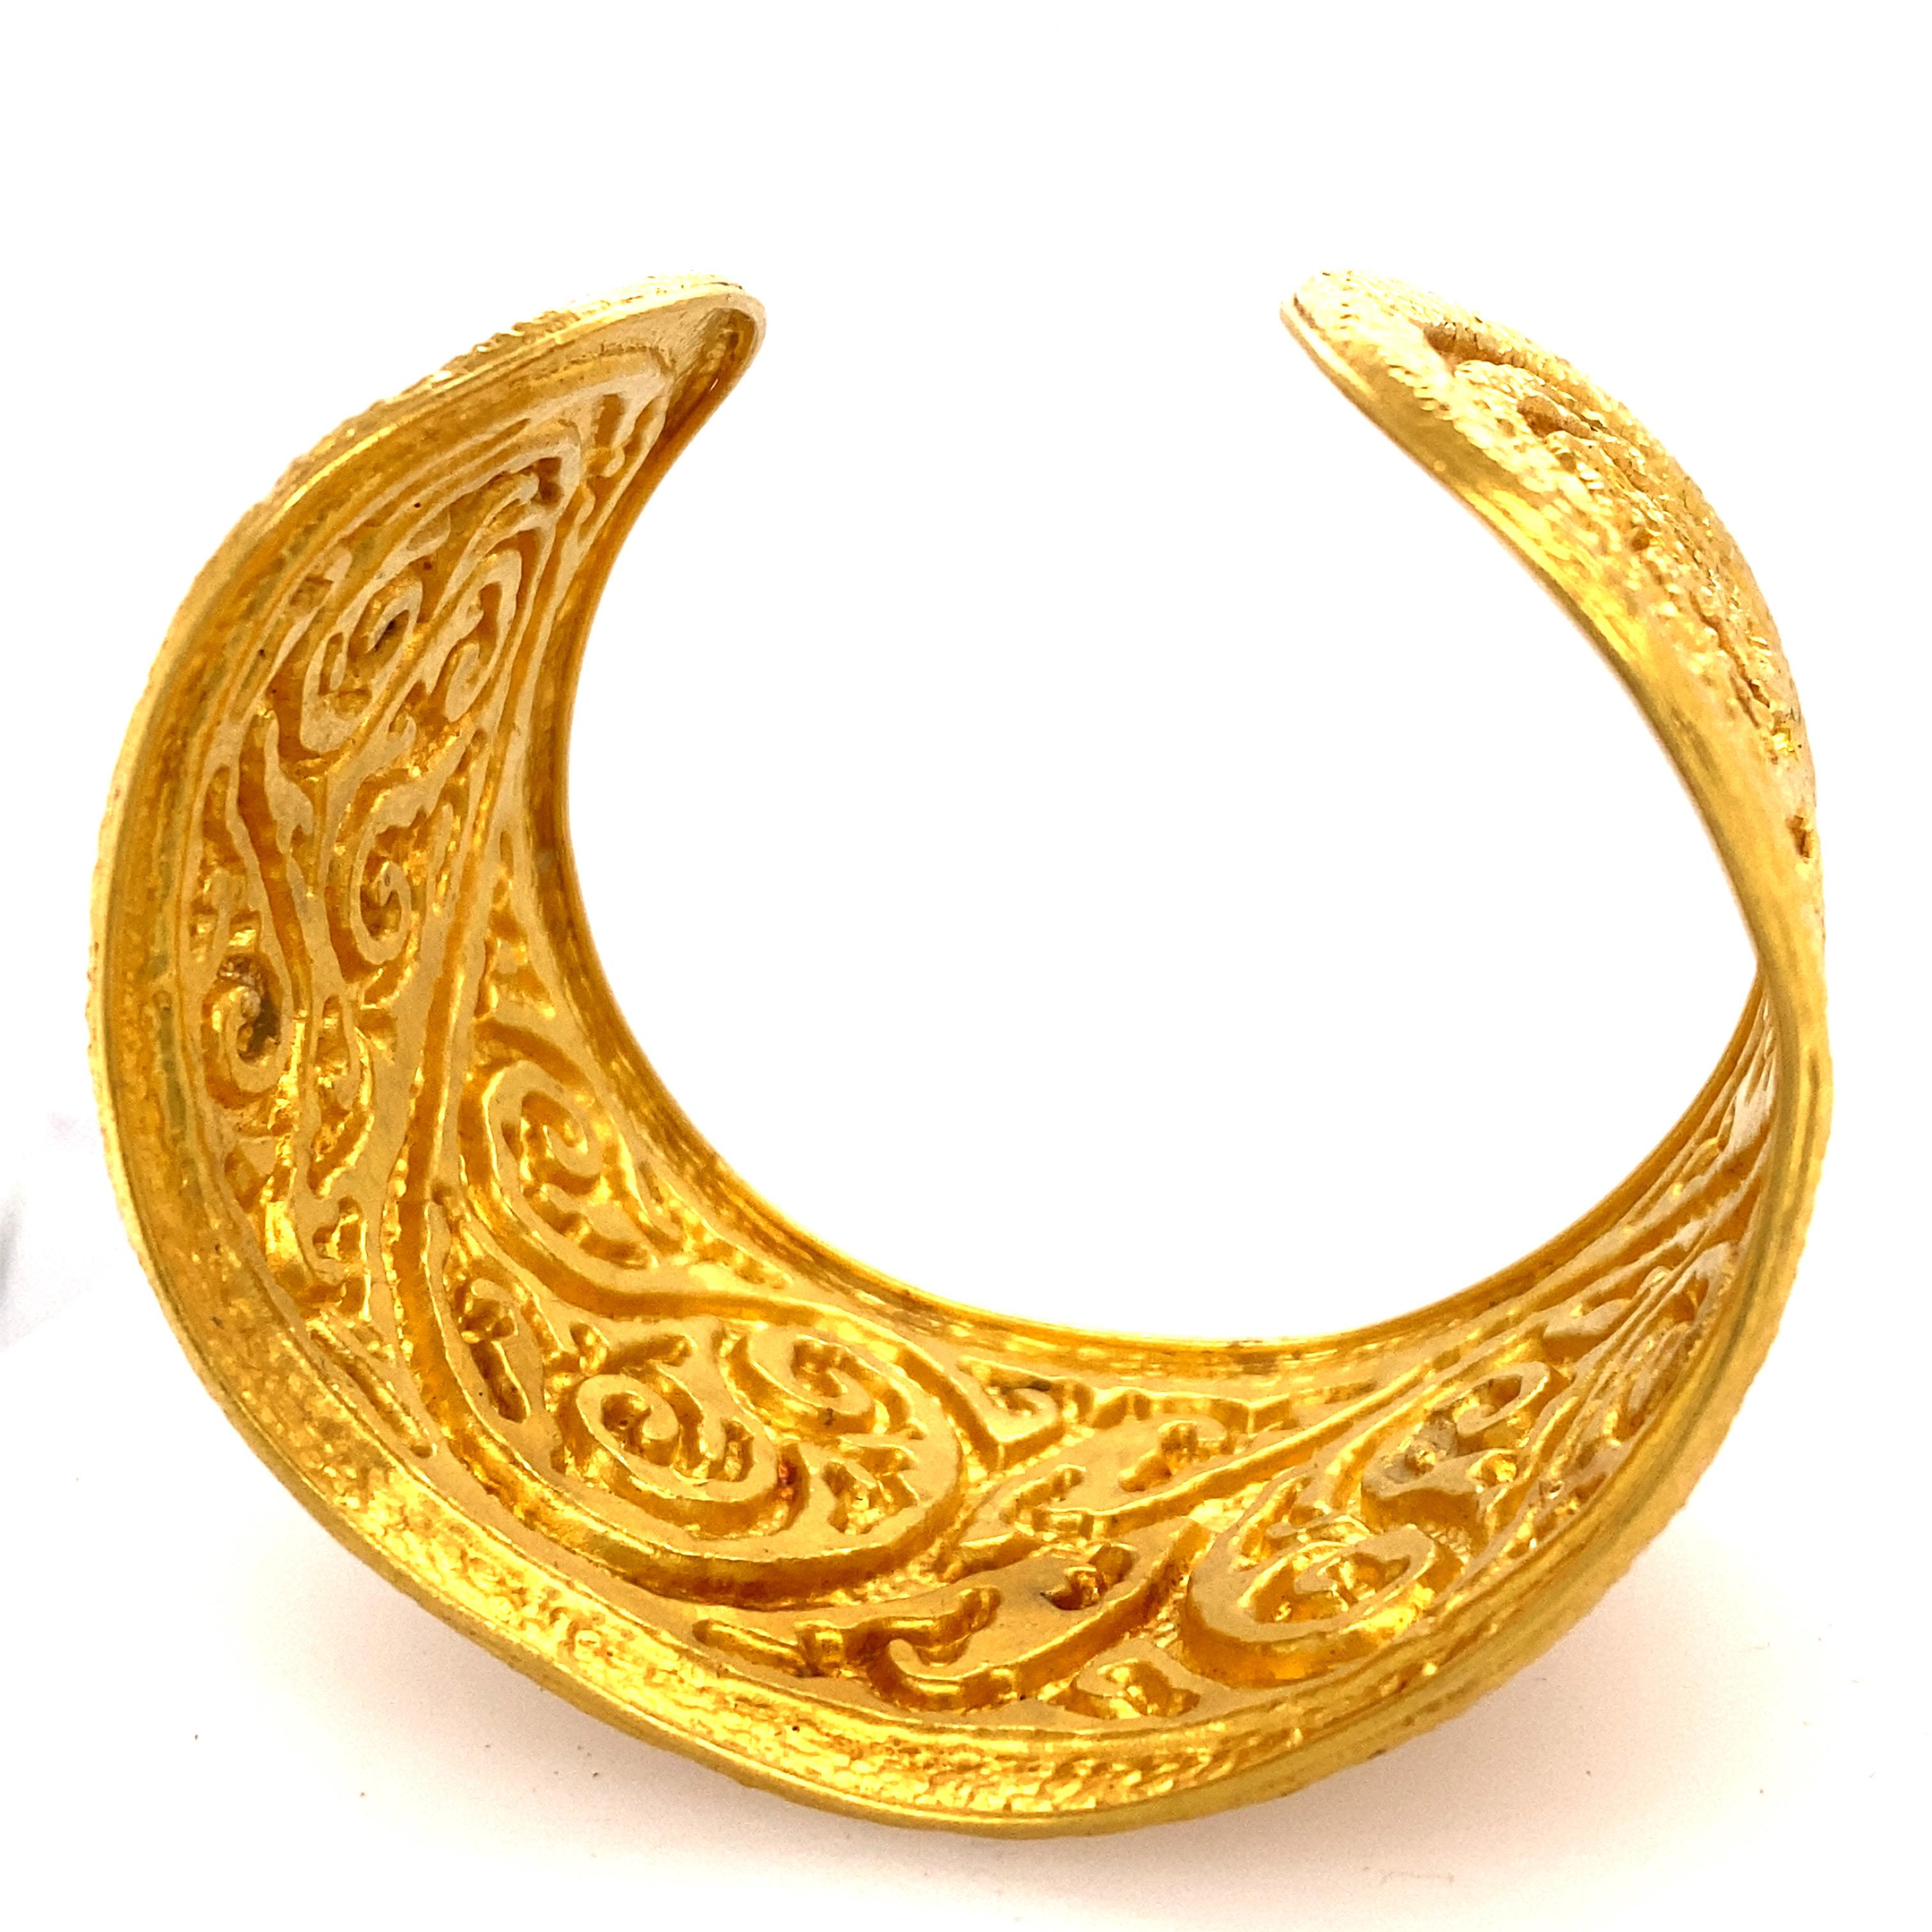 Iilias Lalaounis 22k Gold Cuff Bangle Bracelet 2